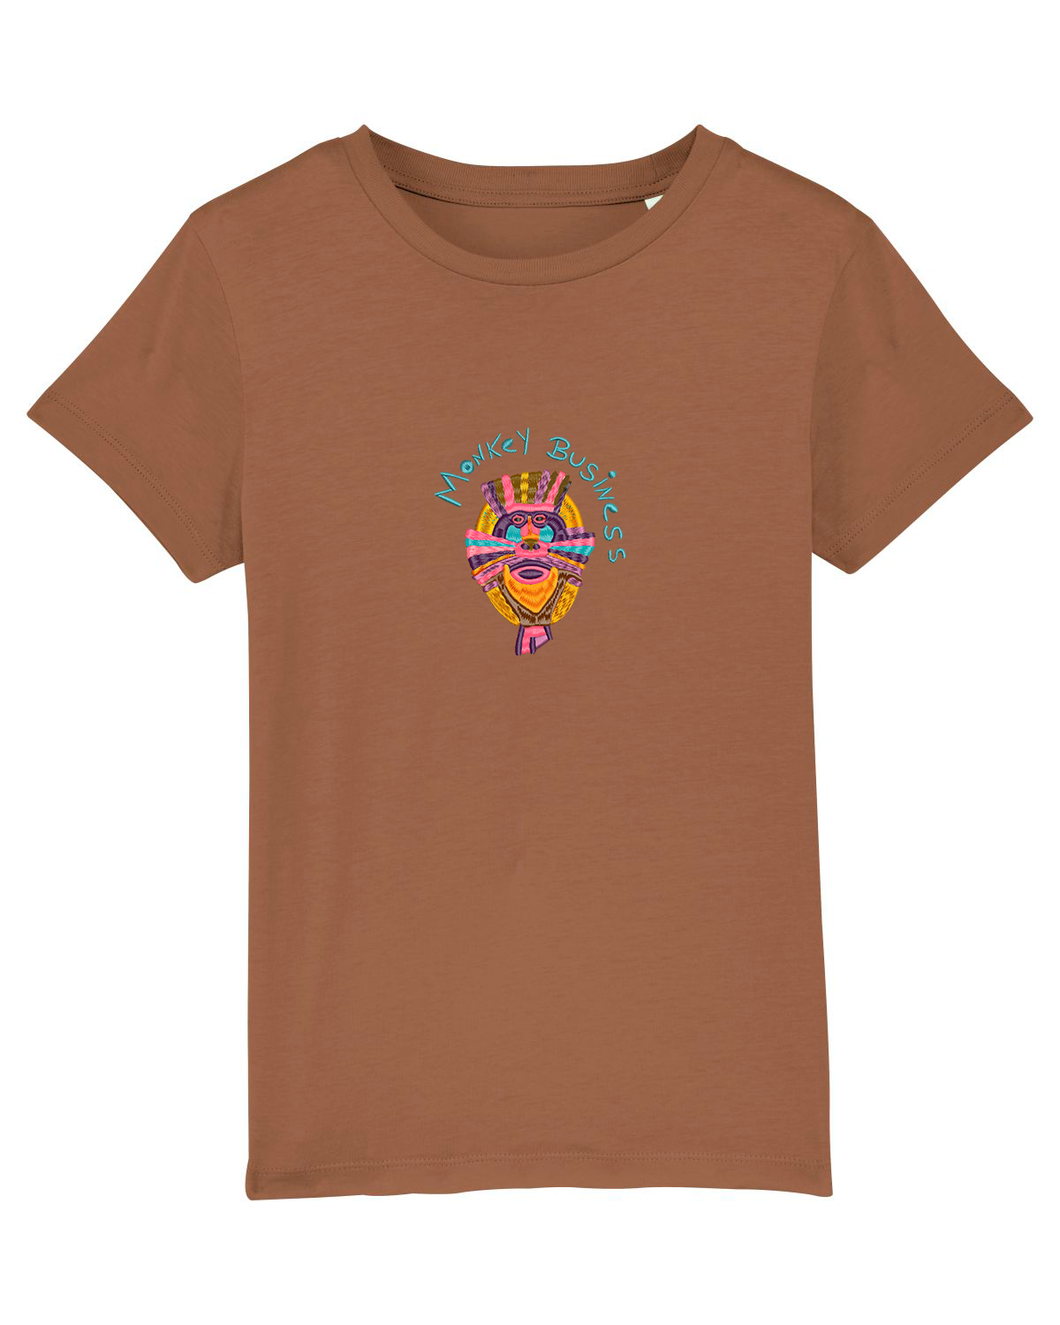 Monkey business 🐵- organic cotton embroidered kids T-shirt